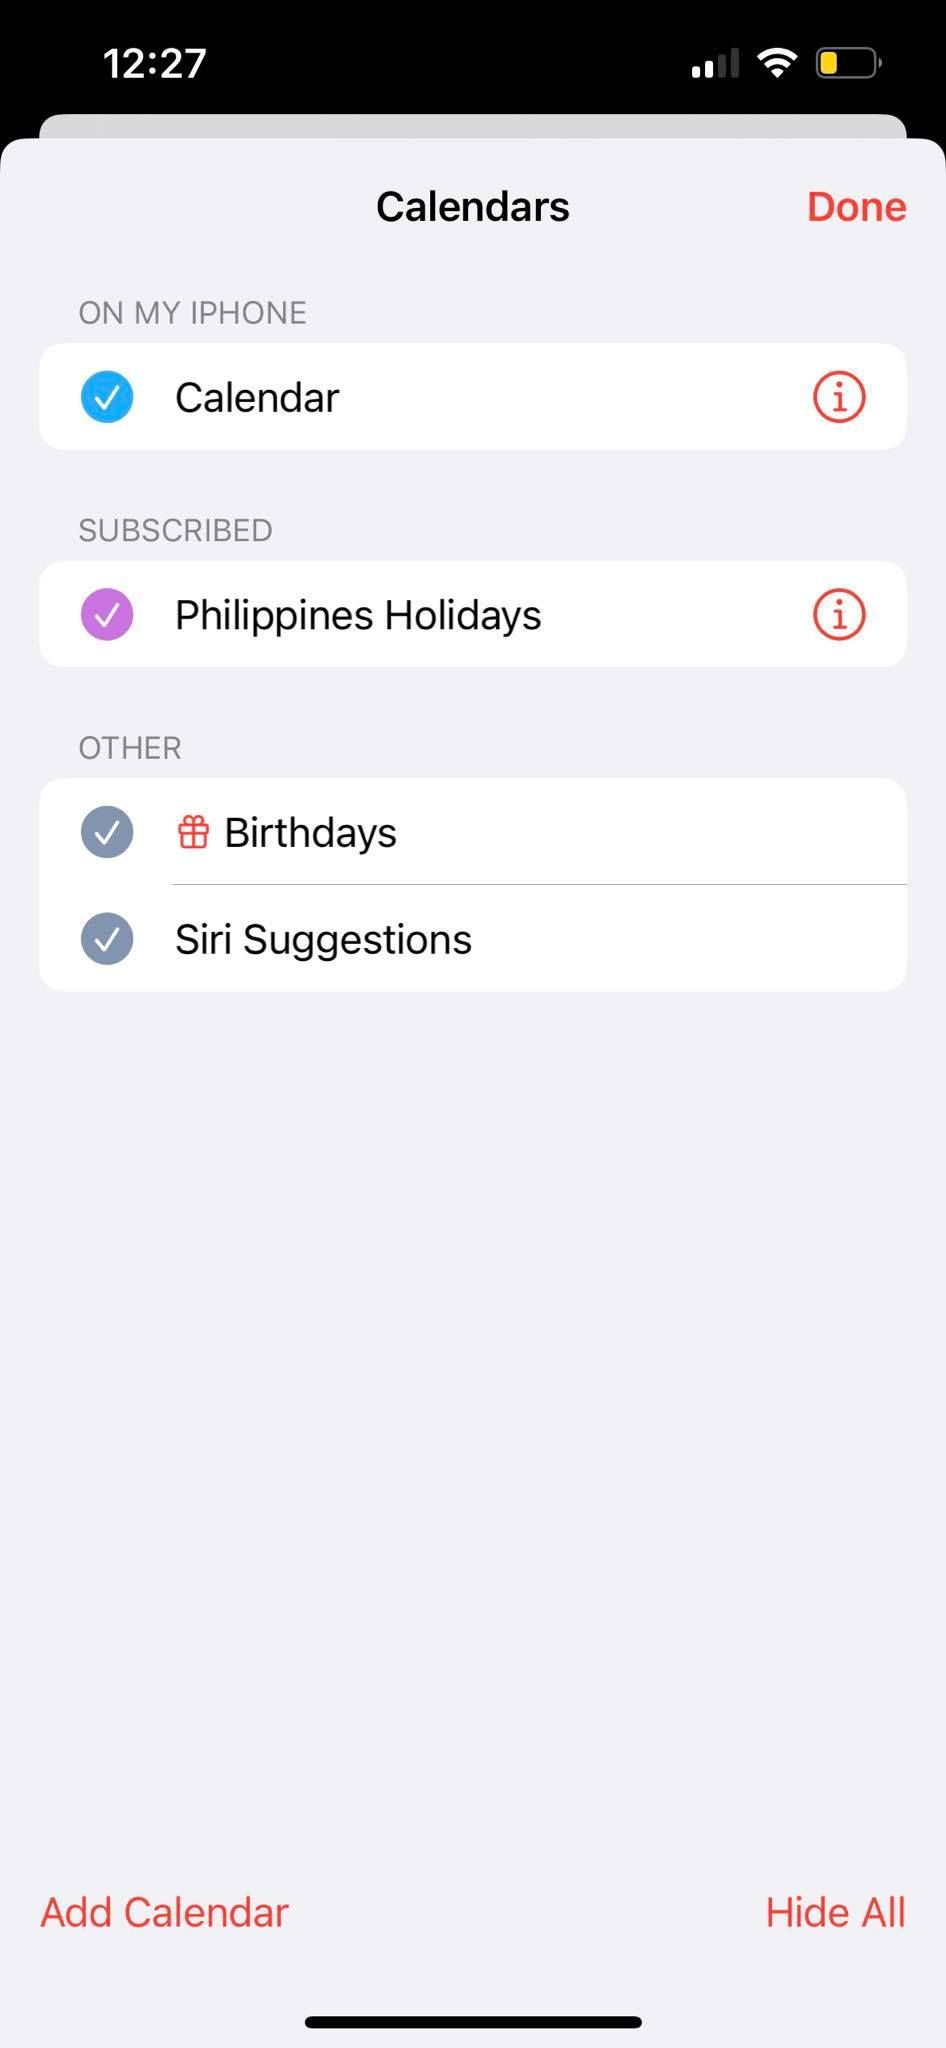 The Calendars Tab in the iPhone Calendar App